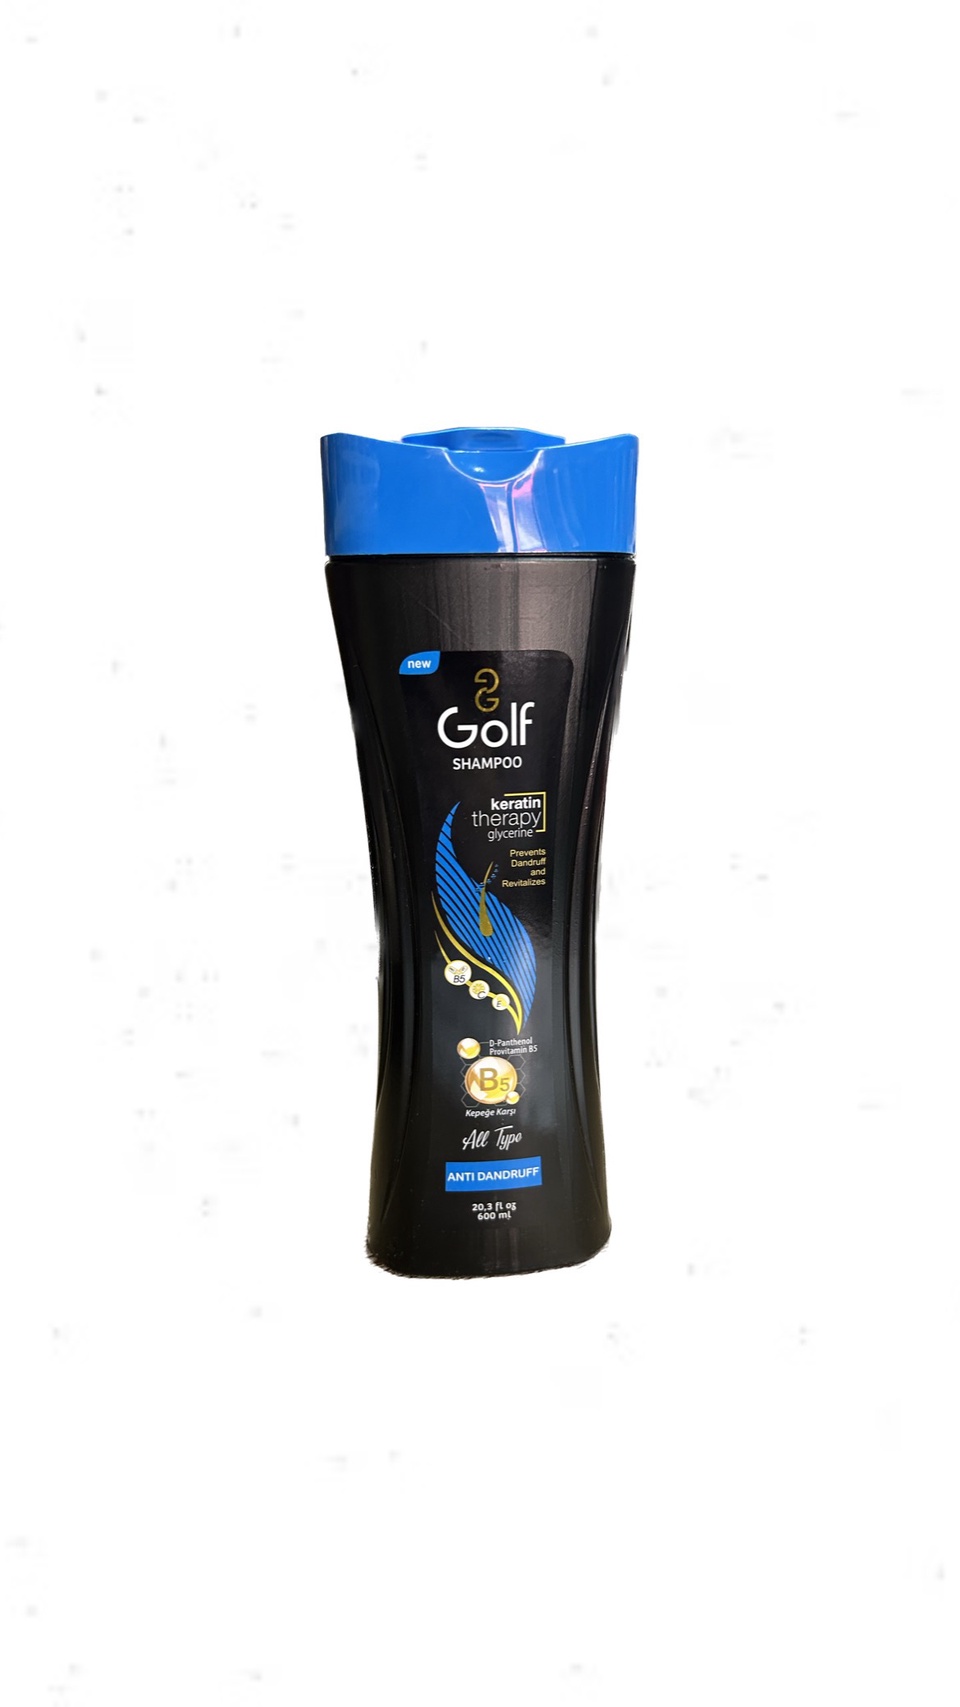 Шампунь для волос Golf Anti Dandruff против перхоти,600 мл - 250 ₽, заказать онлайн.